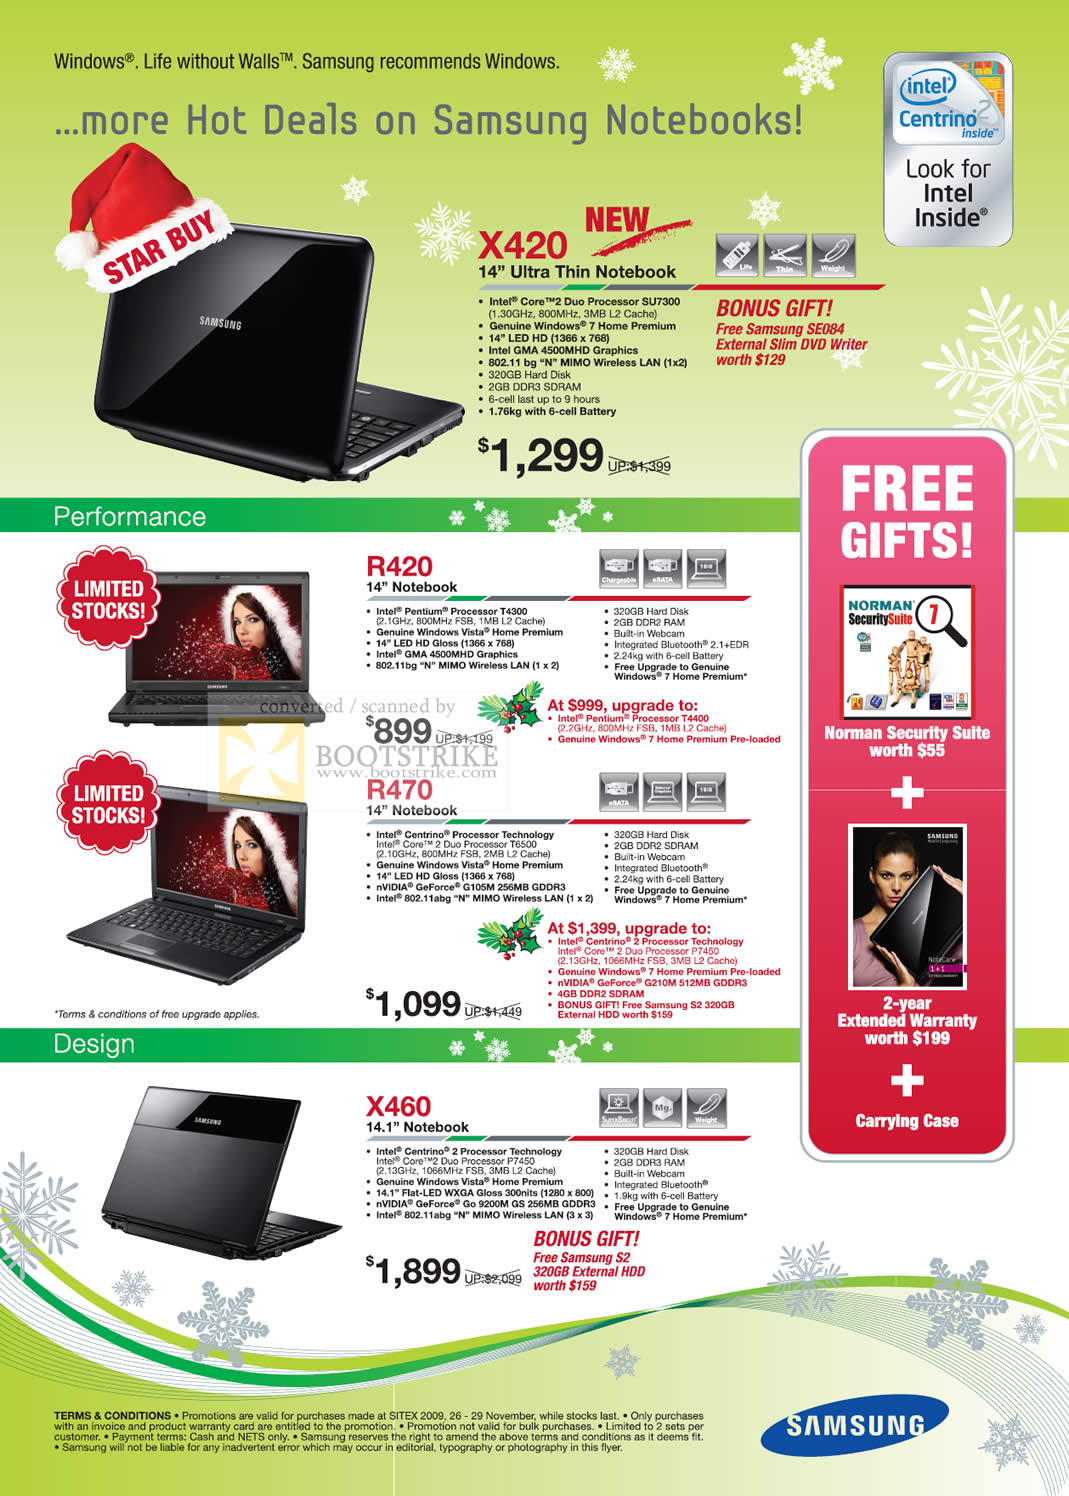 Sitex 2009 price list image brochure of Samsung Notebooks X420 R420 R470 X460